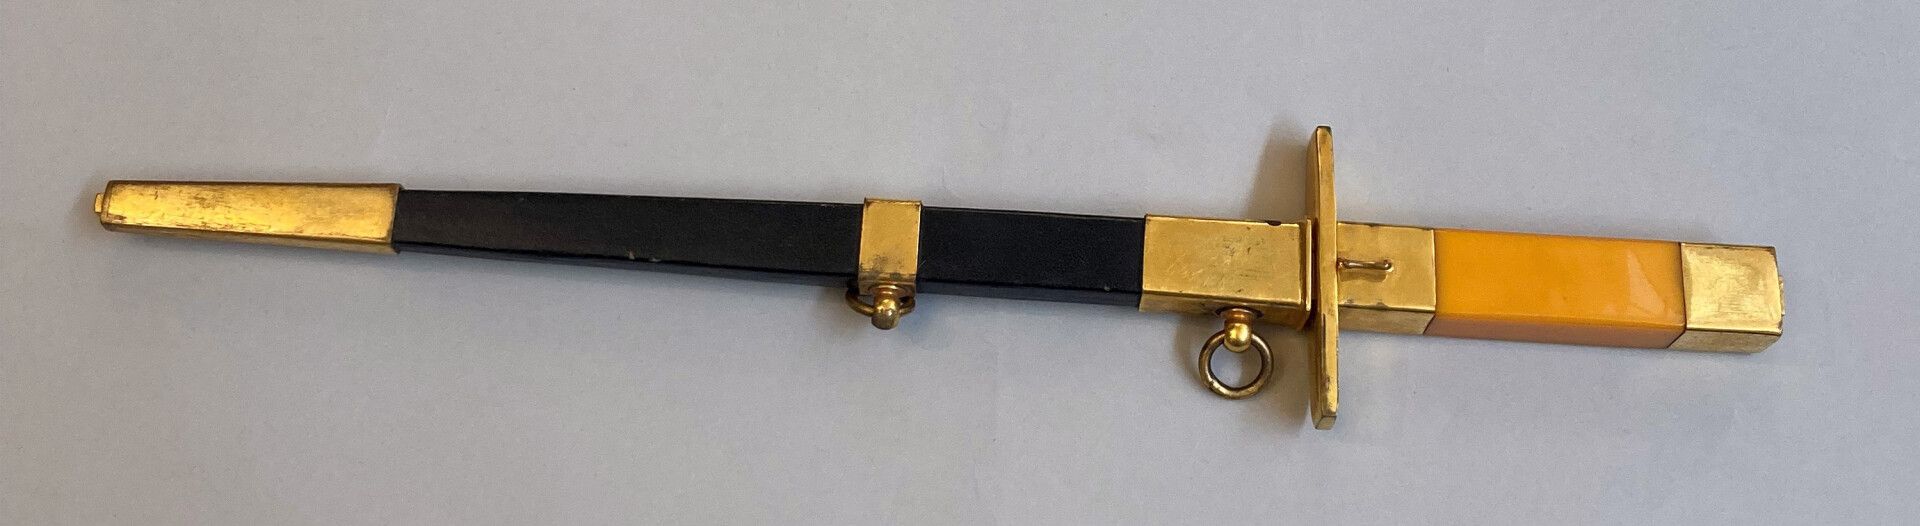 Null Air Force dagger model 1934, orange bakelite fuse, black suede pouch